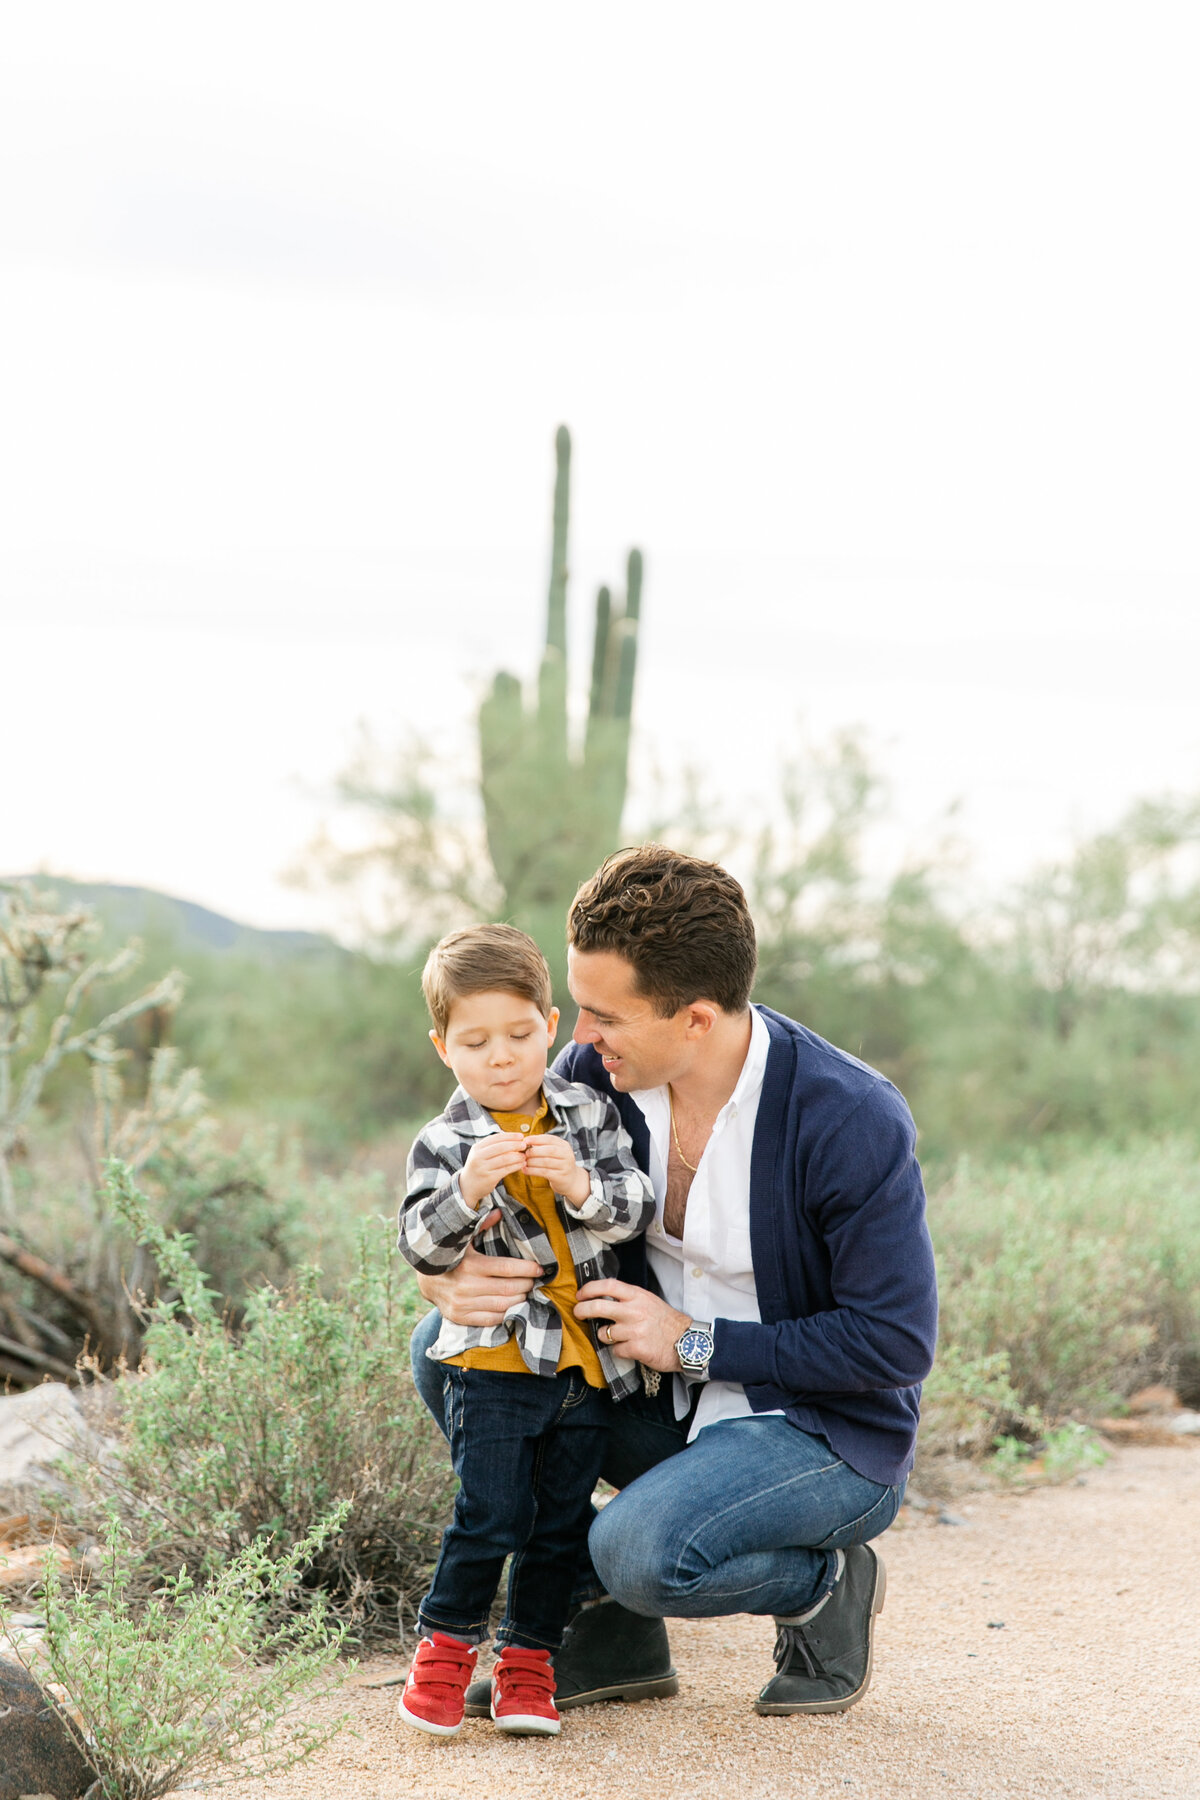 Karlie Colleen Photography - Scottsdale Arizona - Family portraits - Taylor & Family-50